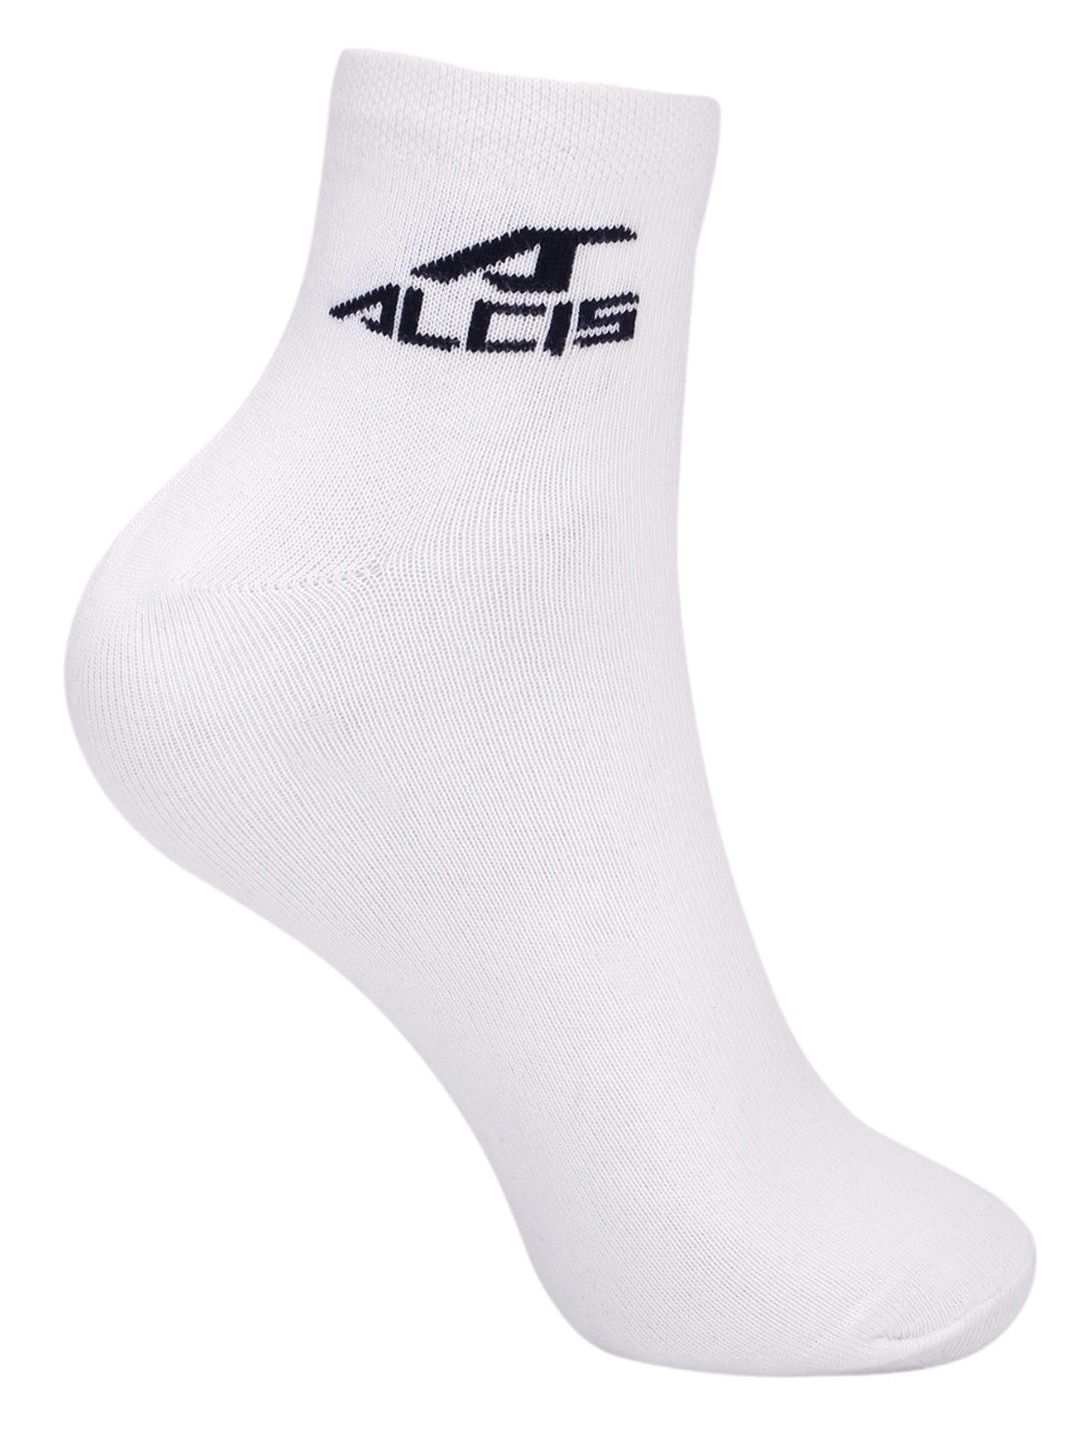 Alcis Men White Ankle Length Socks-Pack of 1-Free Size-White ALD1PCK01WHT-Free Size